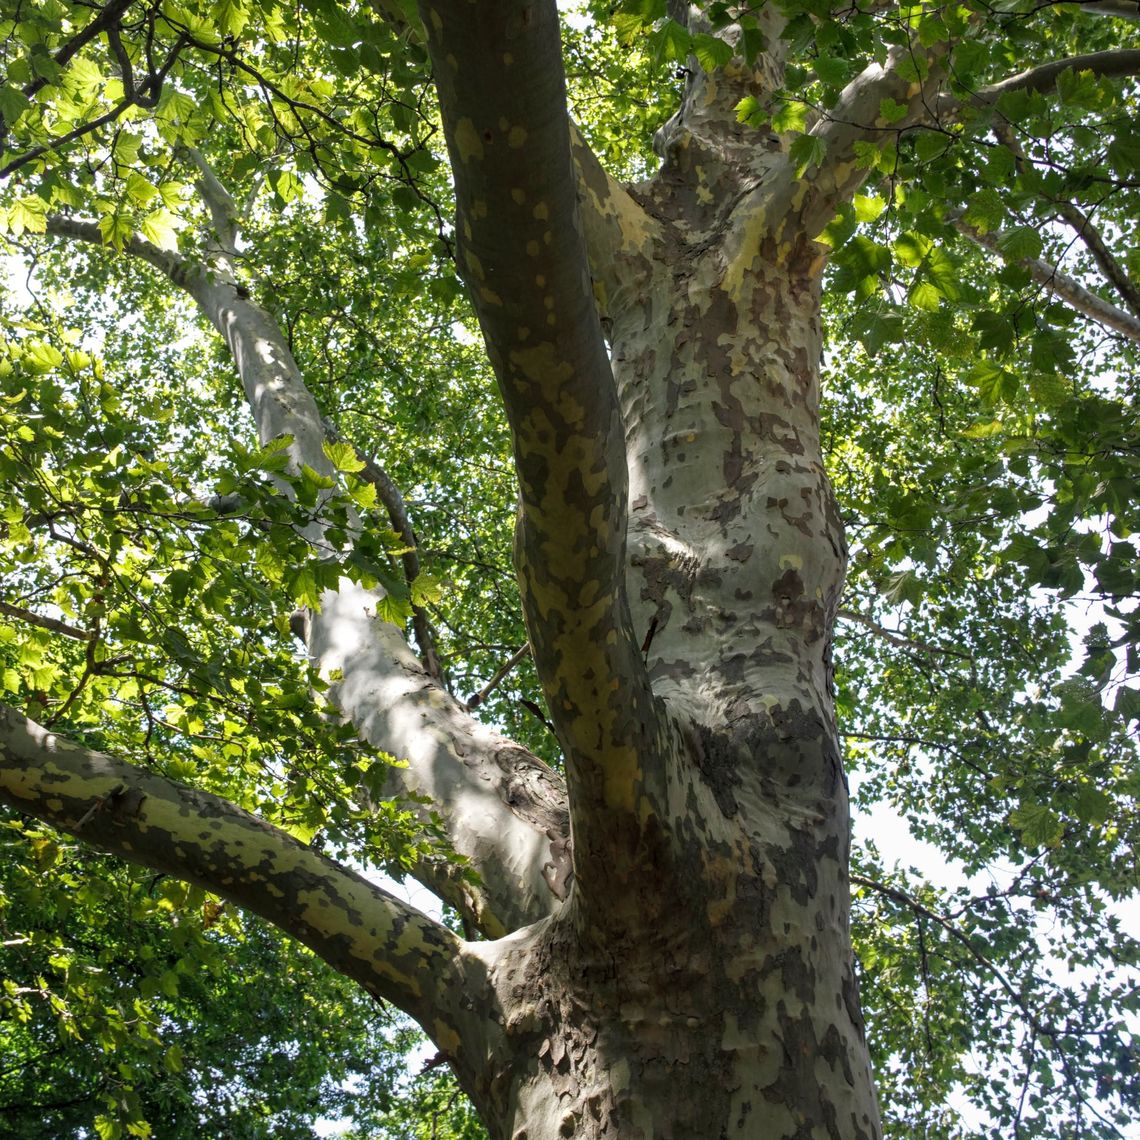 London Plane Tree bark